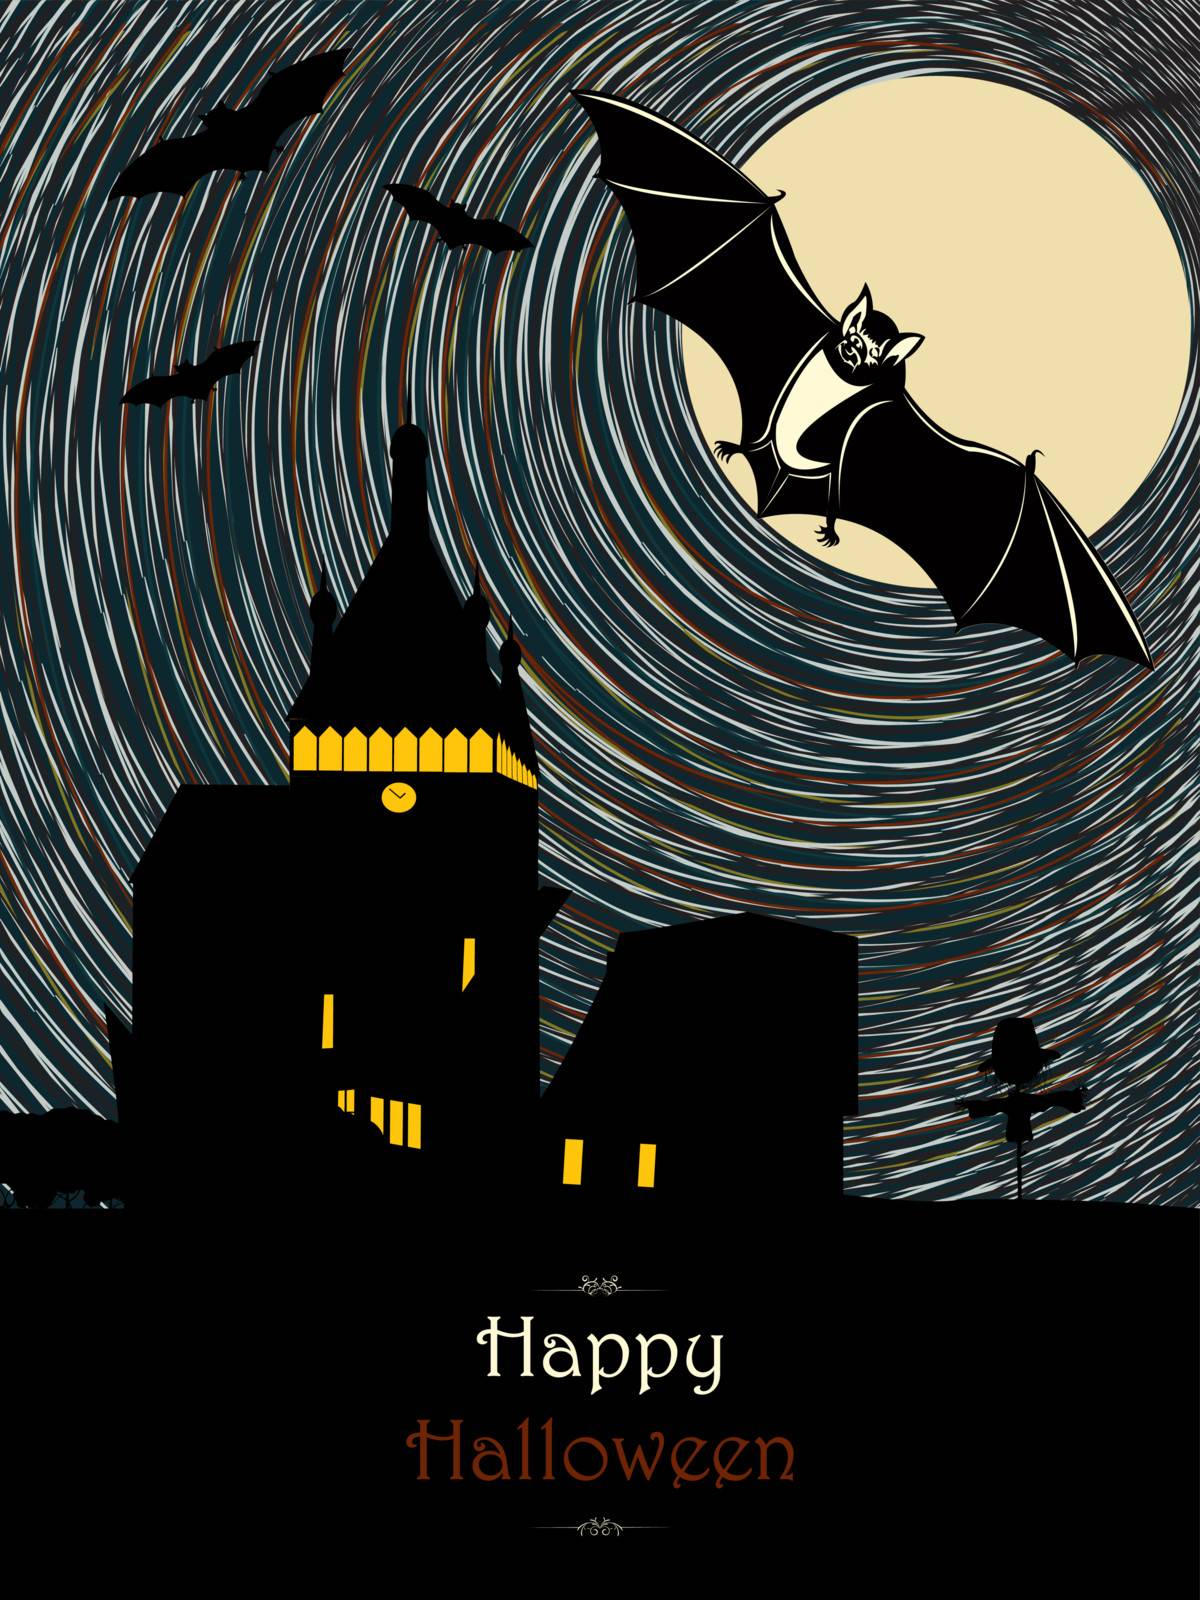 Halloween illustration by Lirch